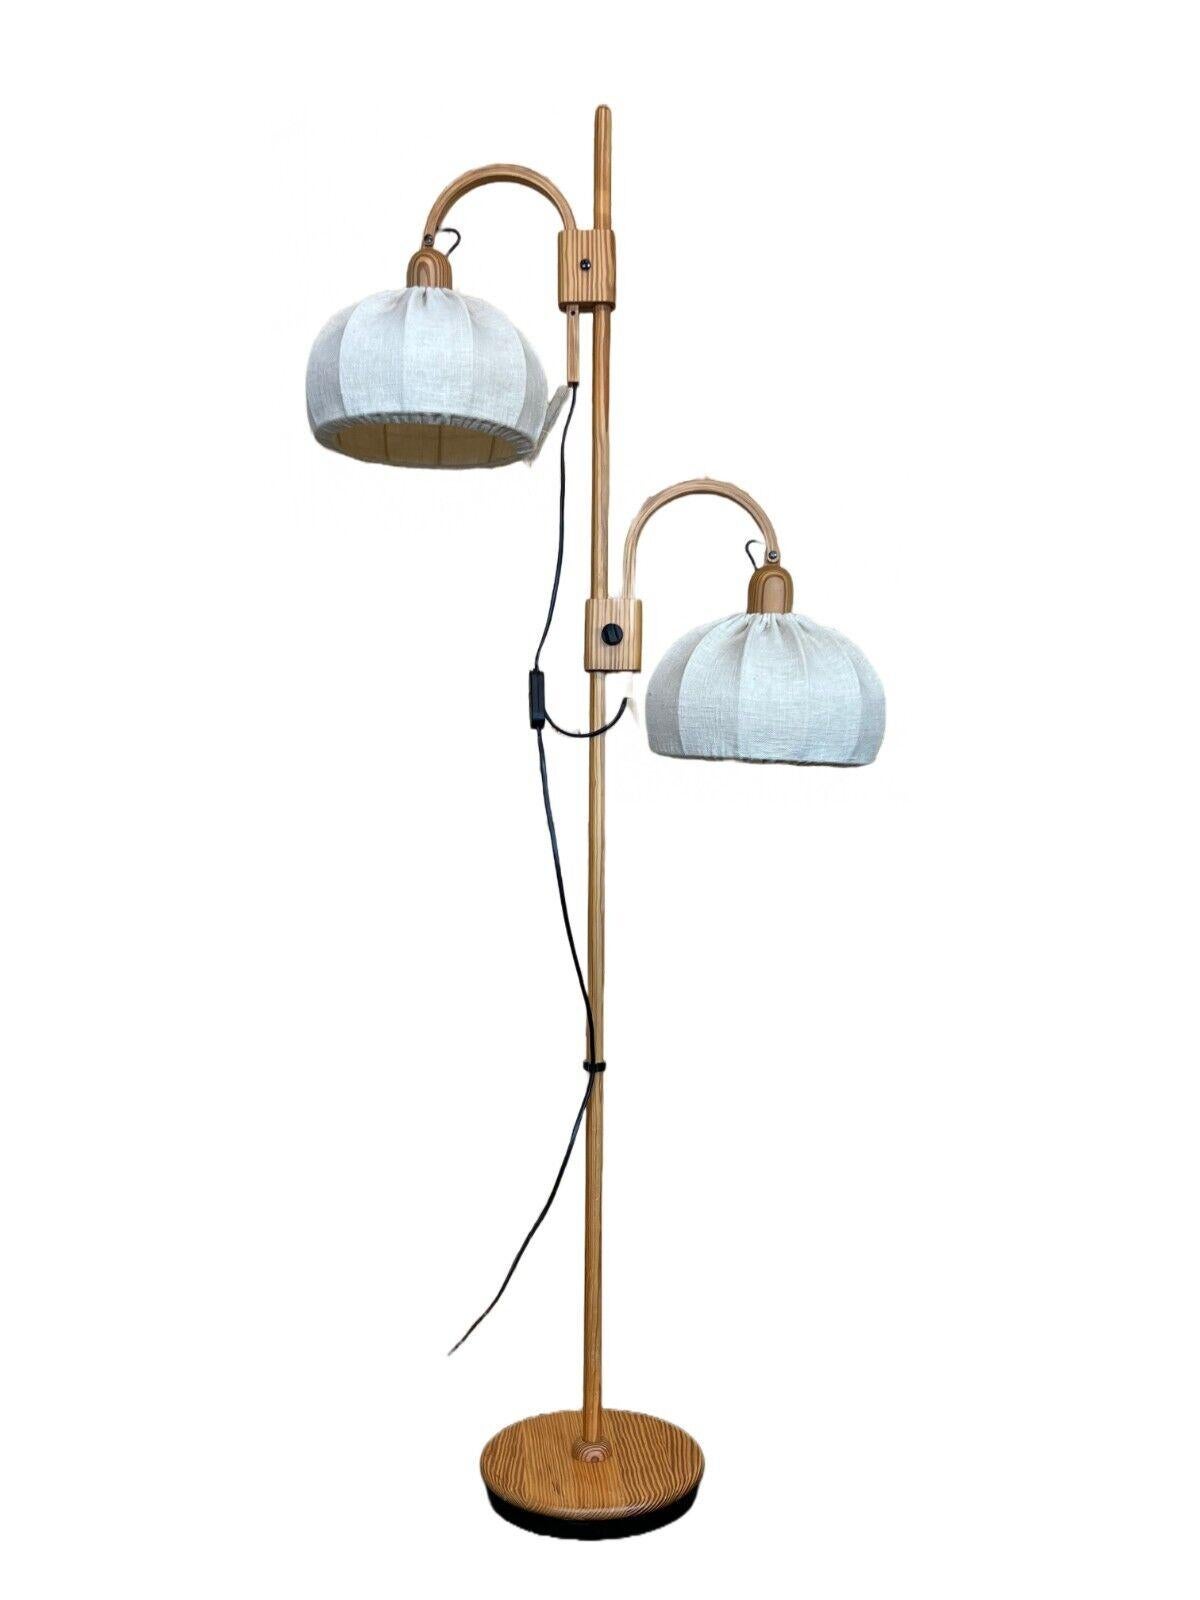 1960s 1970s lamp lamp floor lamp Domus pine Danish design Denmark

Object: floor lamp

Manufacturer: Domus

Condition: good

Age: around 1960-1970

Dimensions:

Width = 68cm
Depth = 28cm
Height = 158cm

Other notes:

2x E27